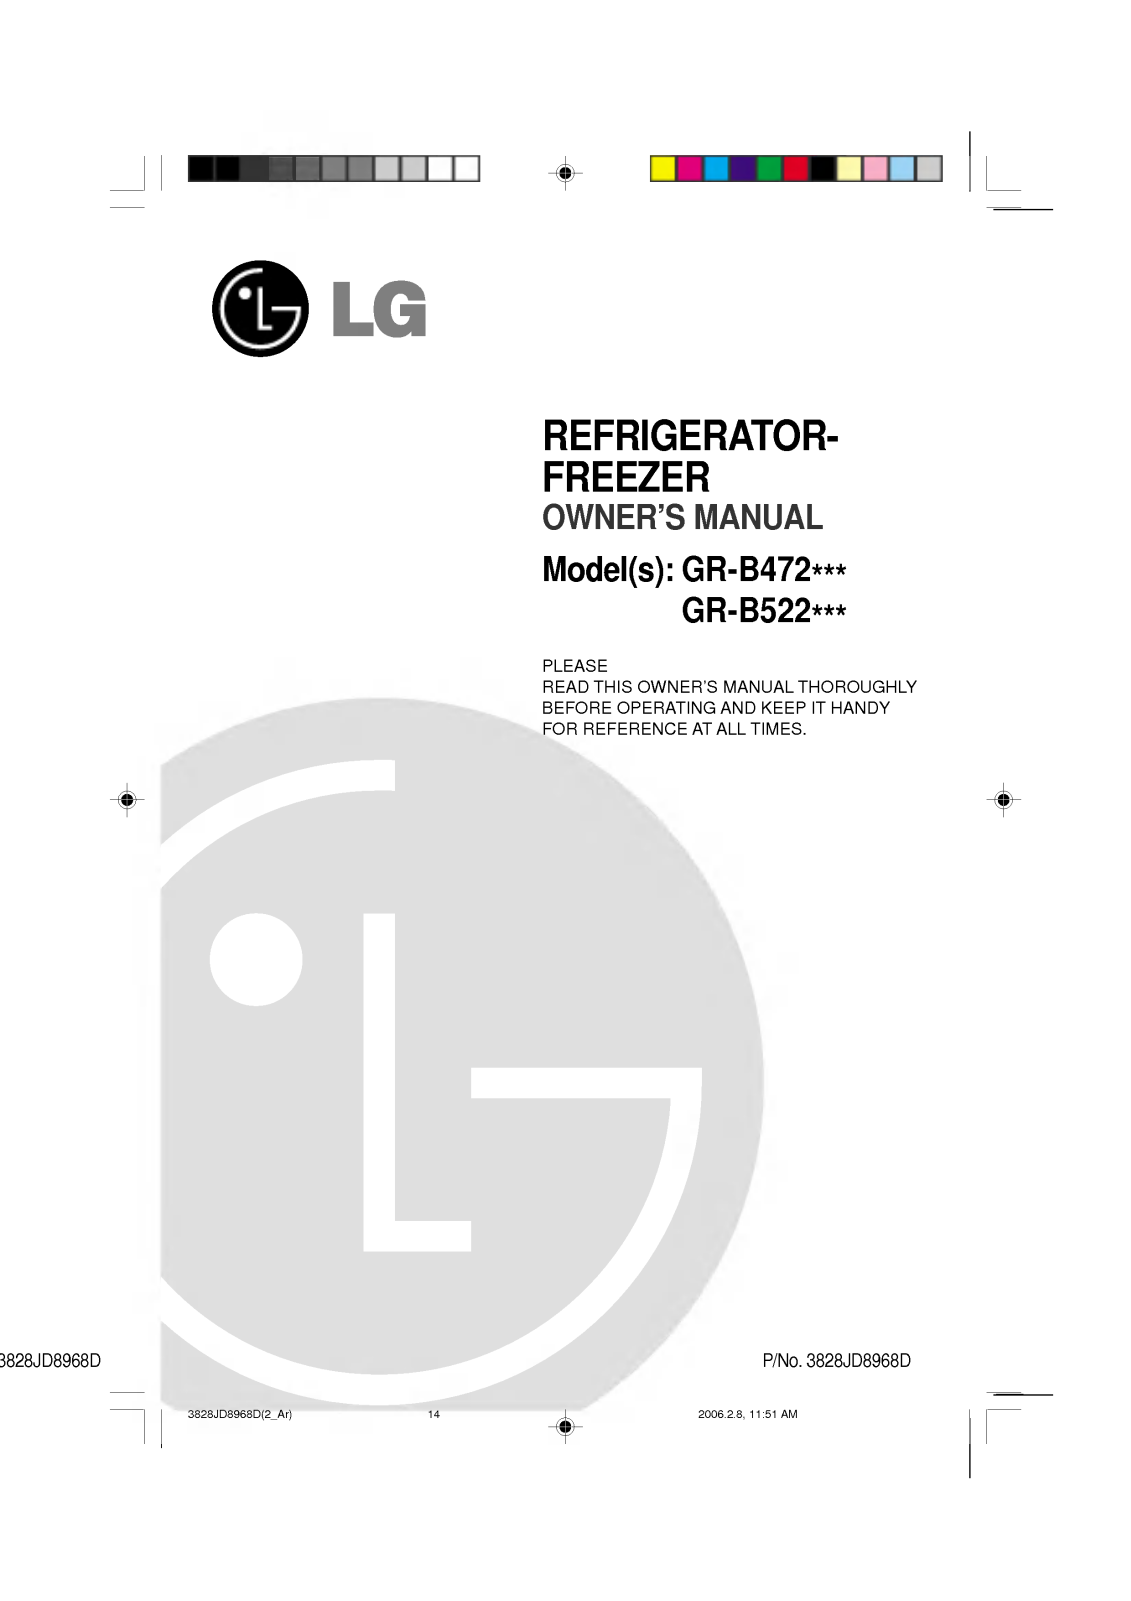 LG GR-B522Q Owner’s Manual